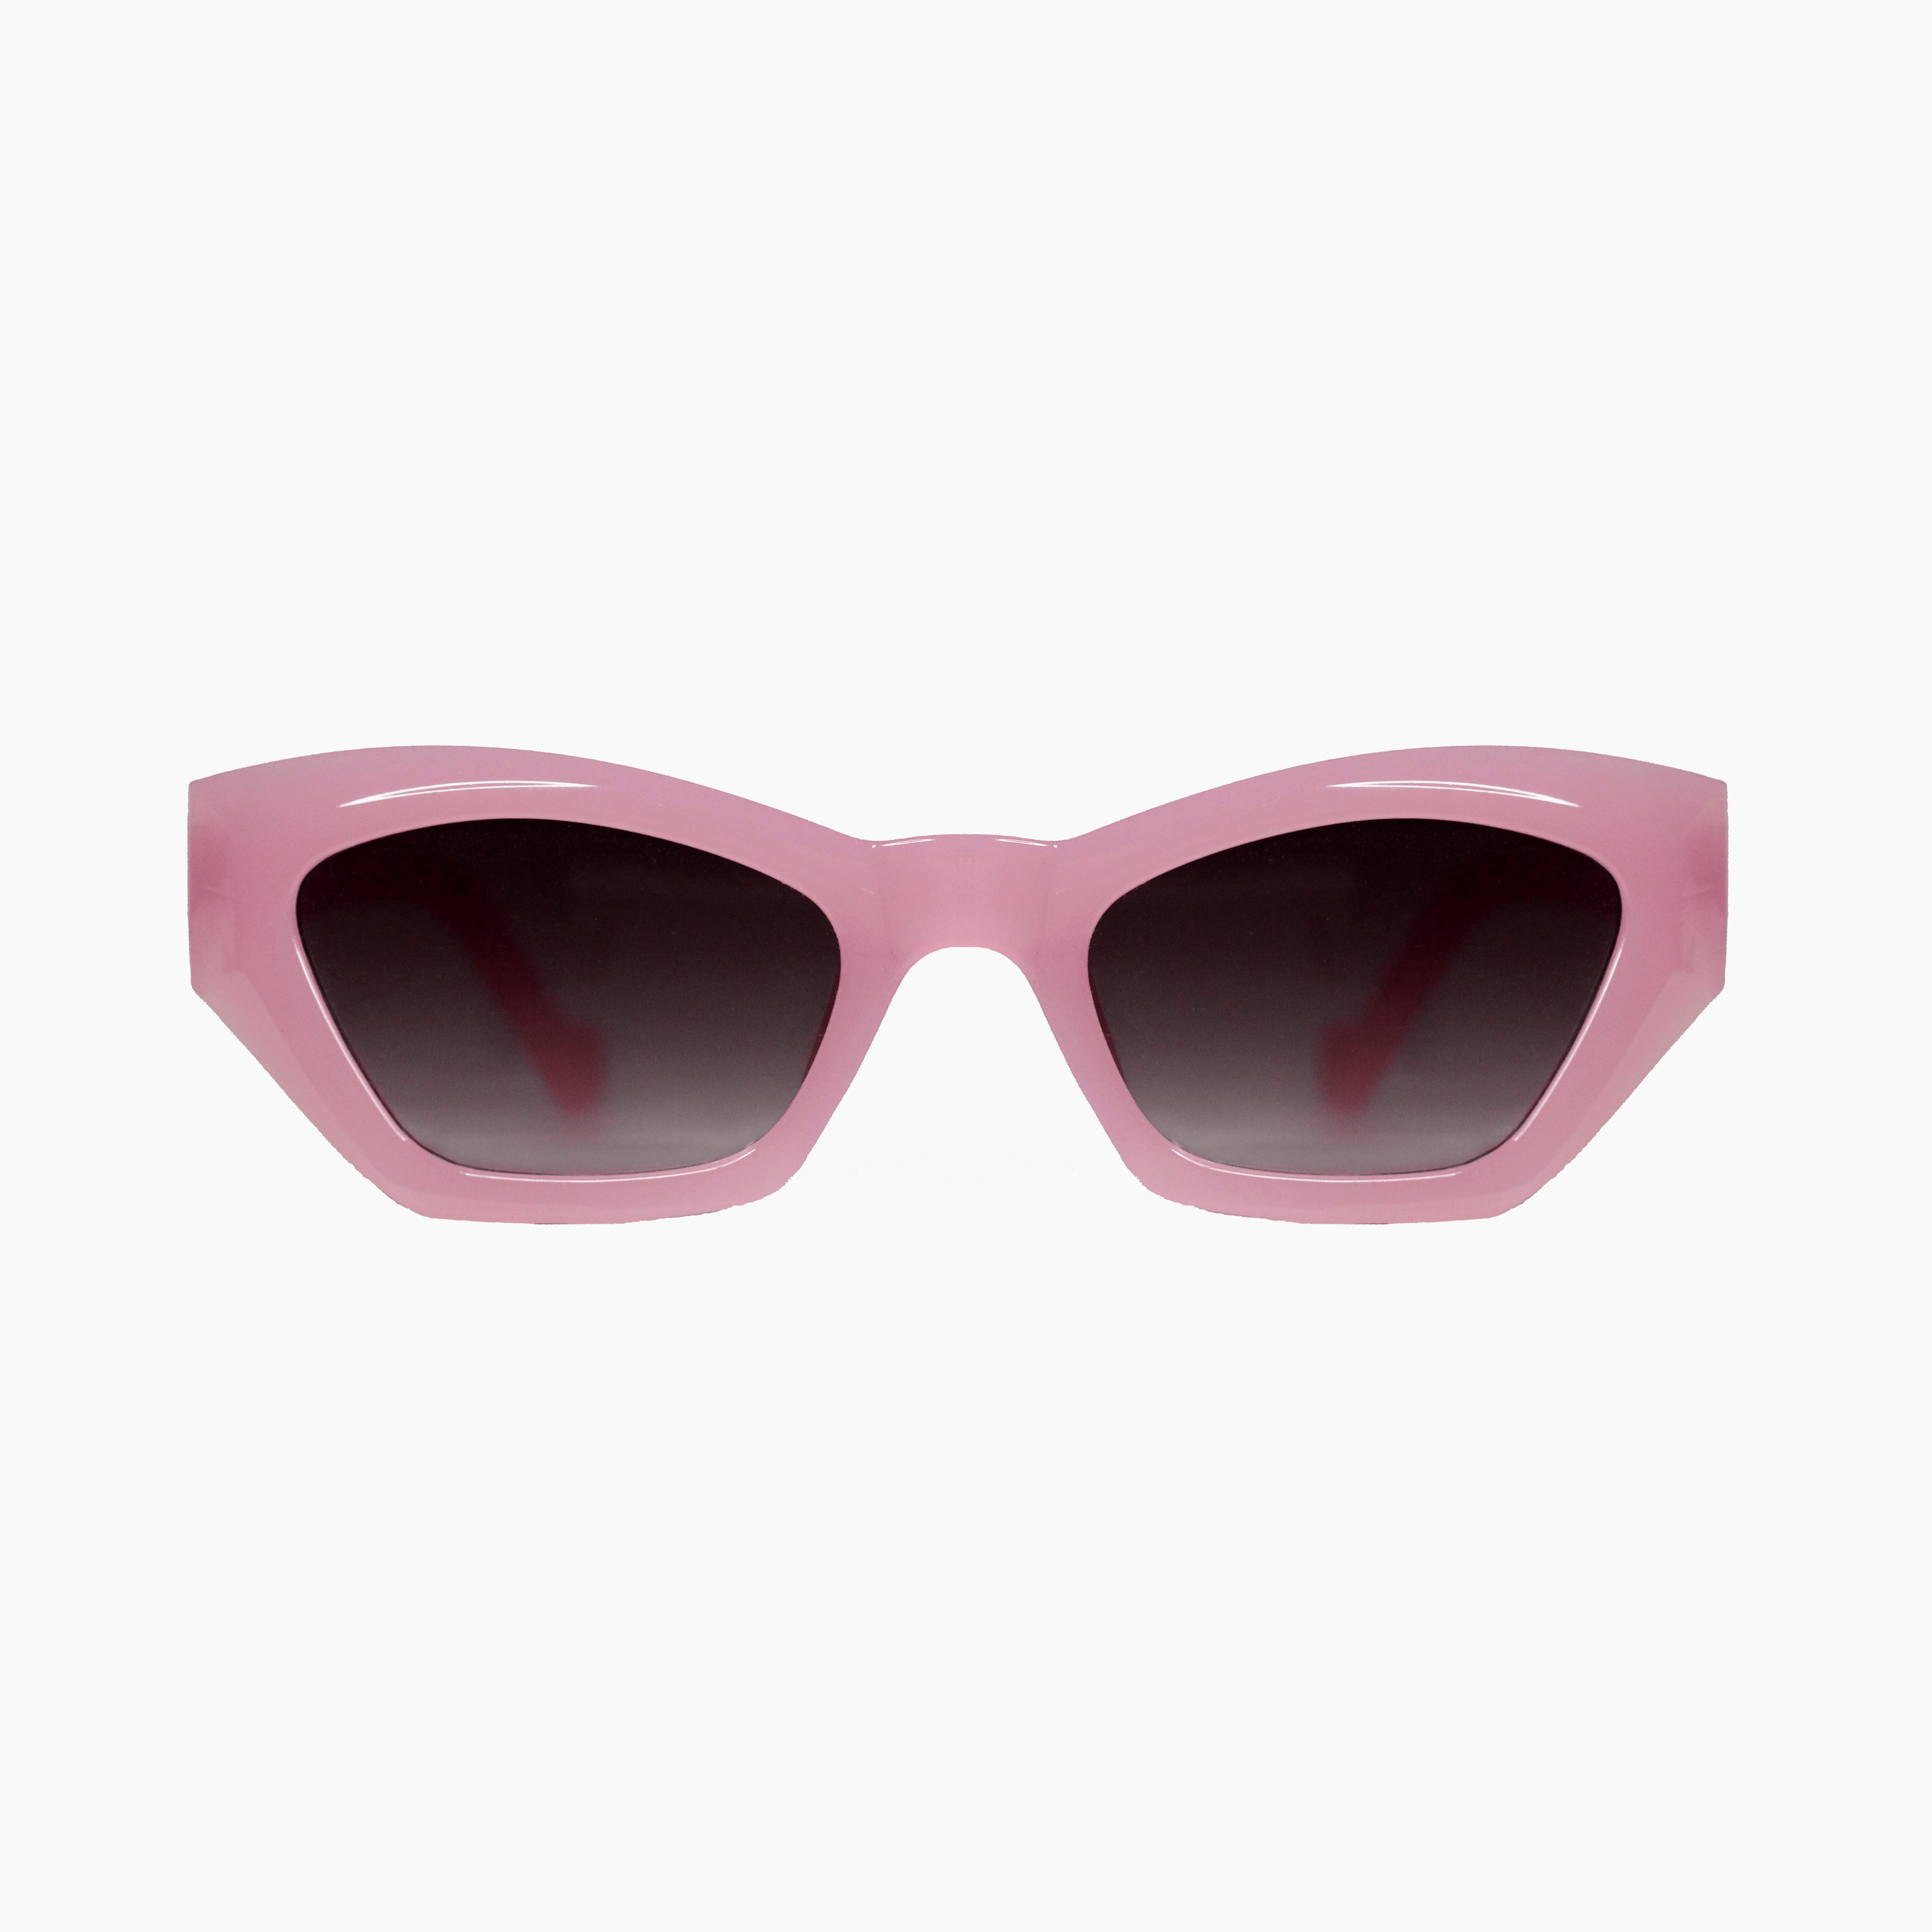 Olivia +UV Shield Sunglasses